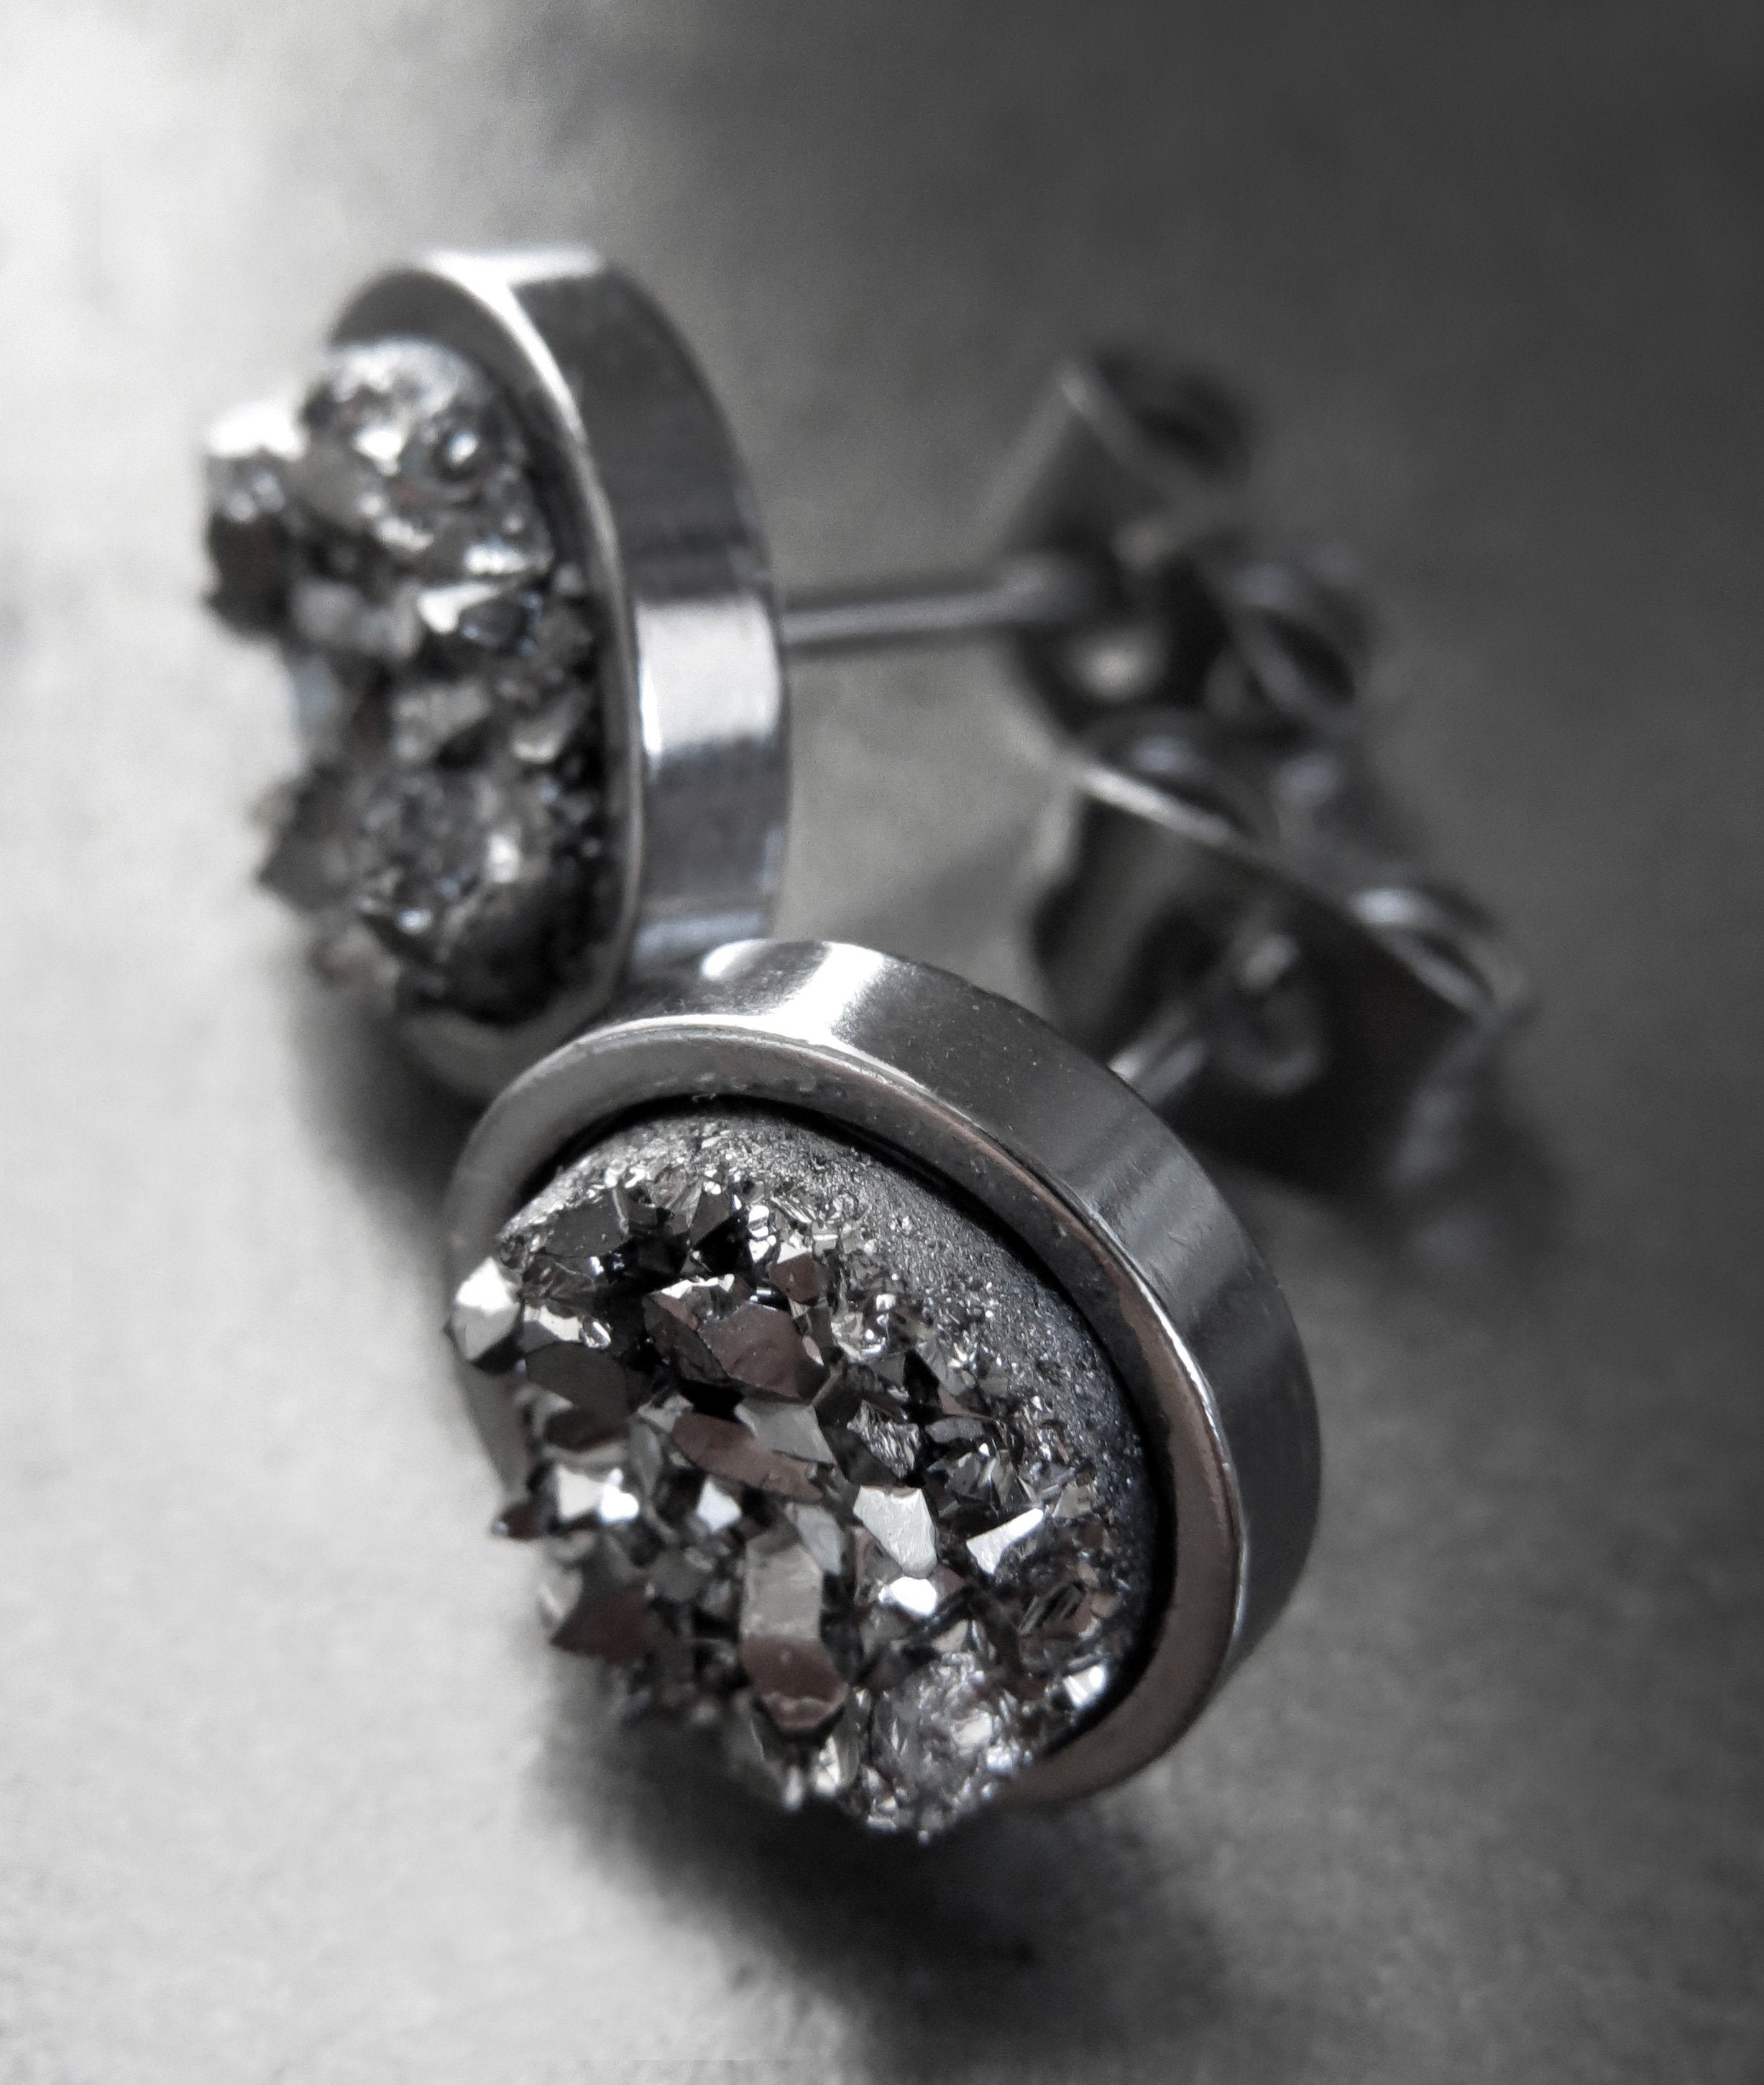 ROUGH TERRAIN - Metallic Gunmetal Stud Earrings with Simulated Druzy Stone in Dark Grey - Large Modern Post Earrings for Men Unisex Women